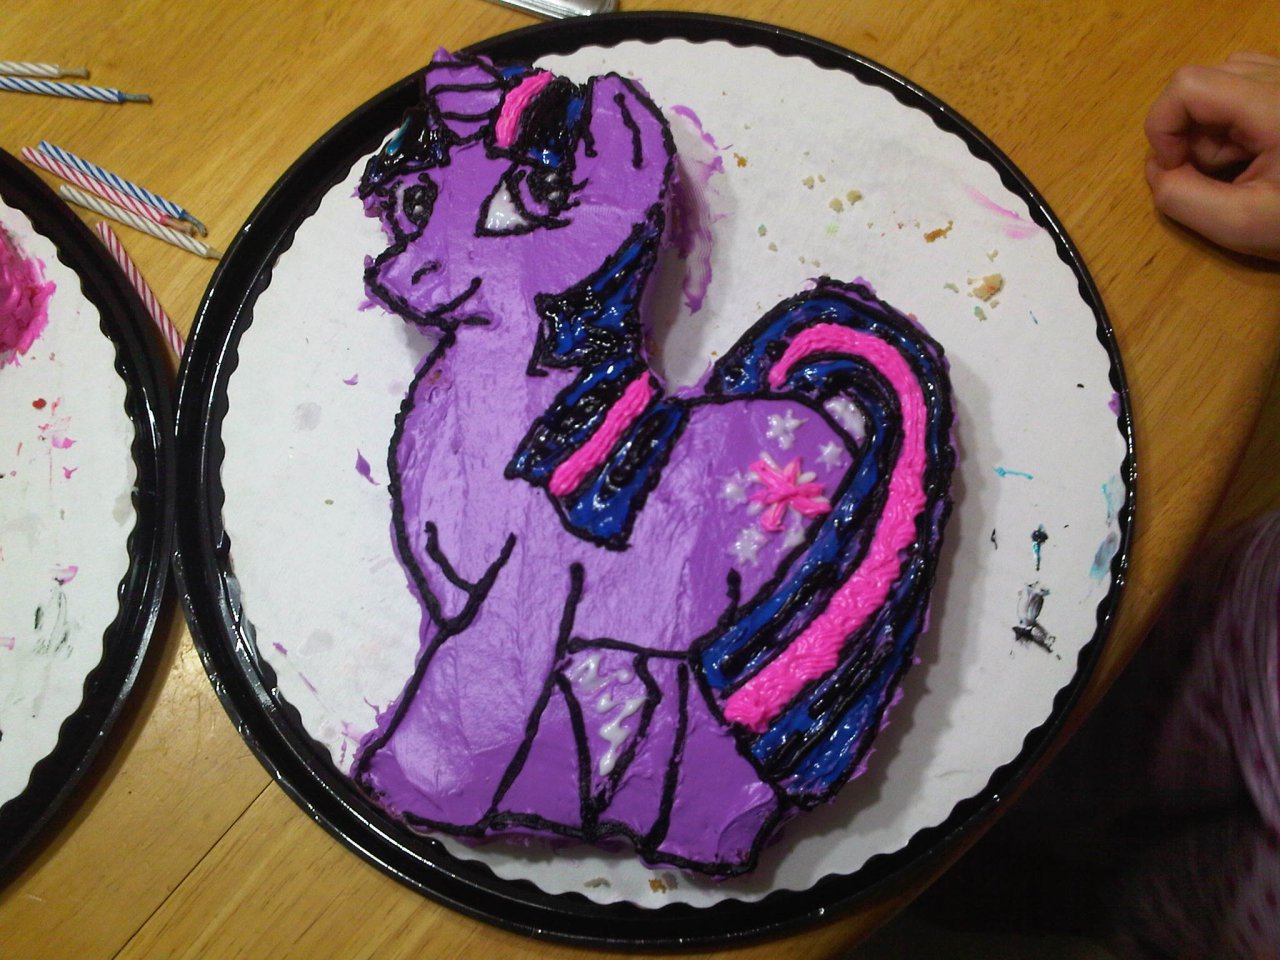 twilight sparkle birthday cake